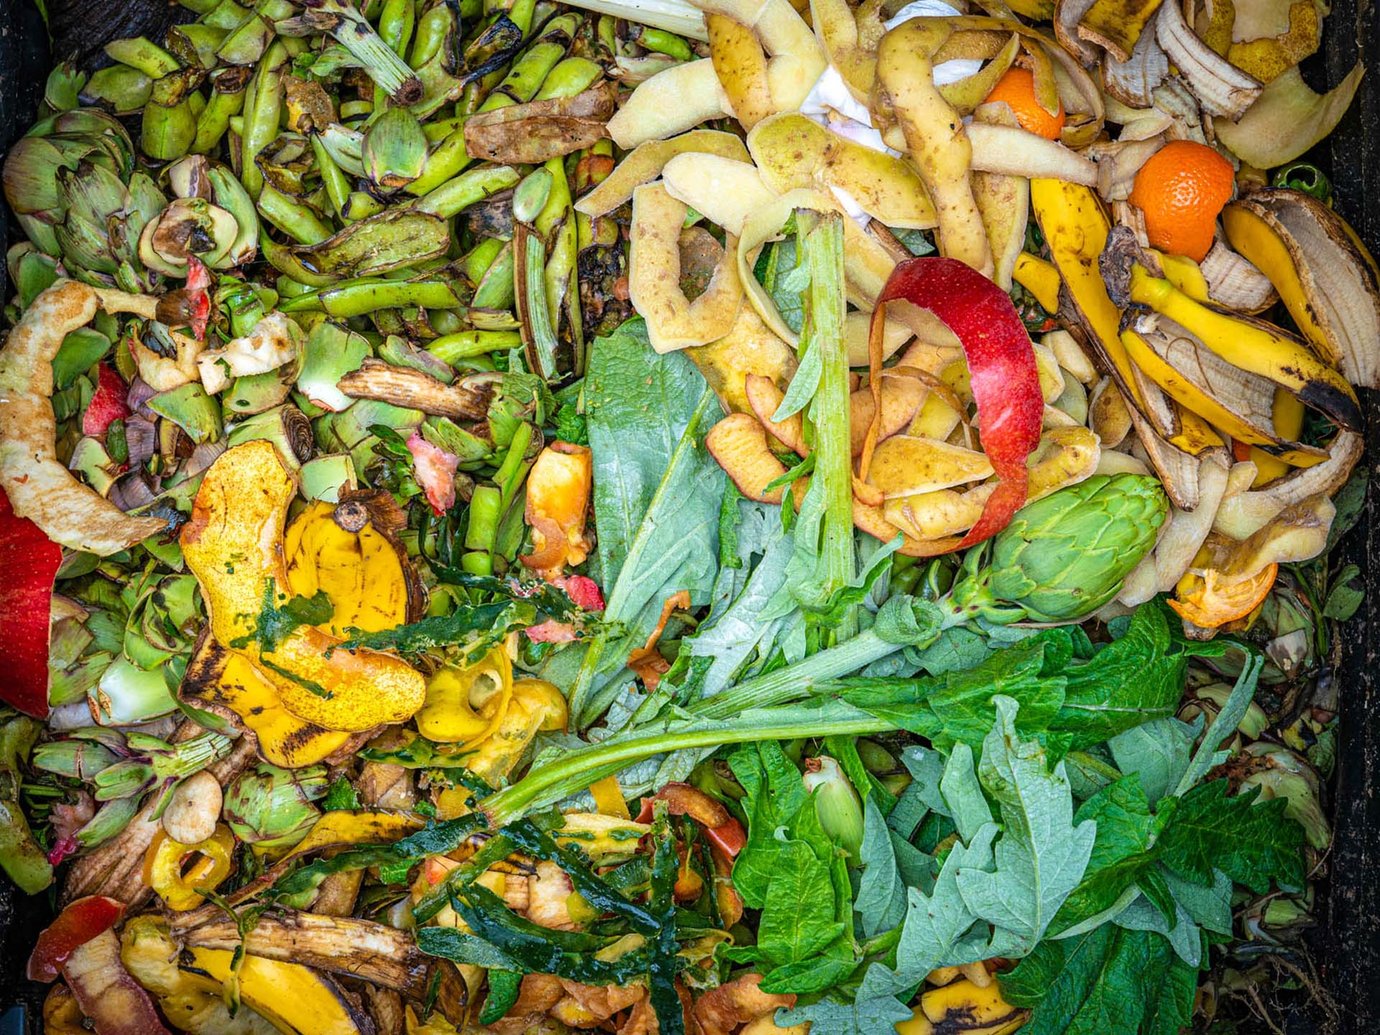 pile of organic food waste